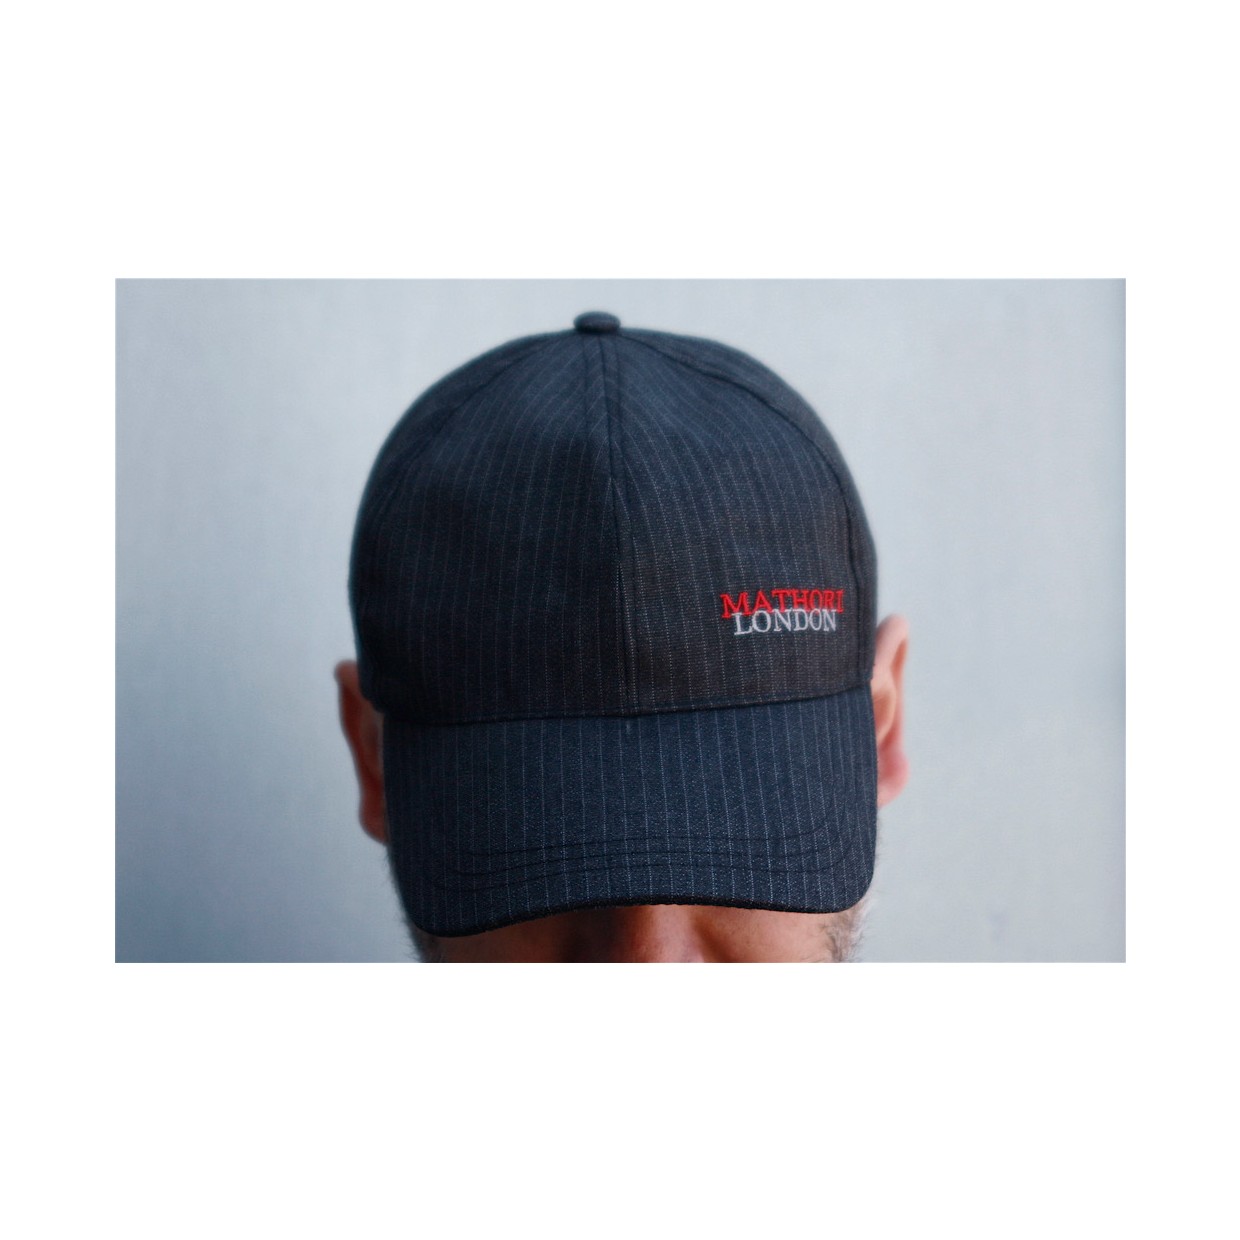 Mathori London - Stripe Cap (Black/Grey)